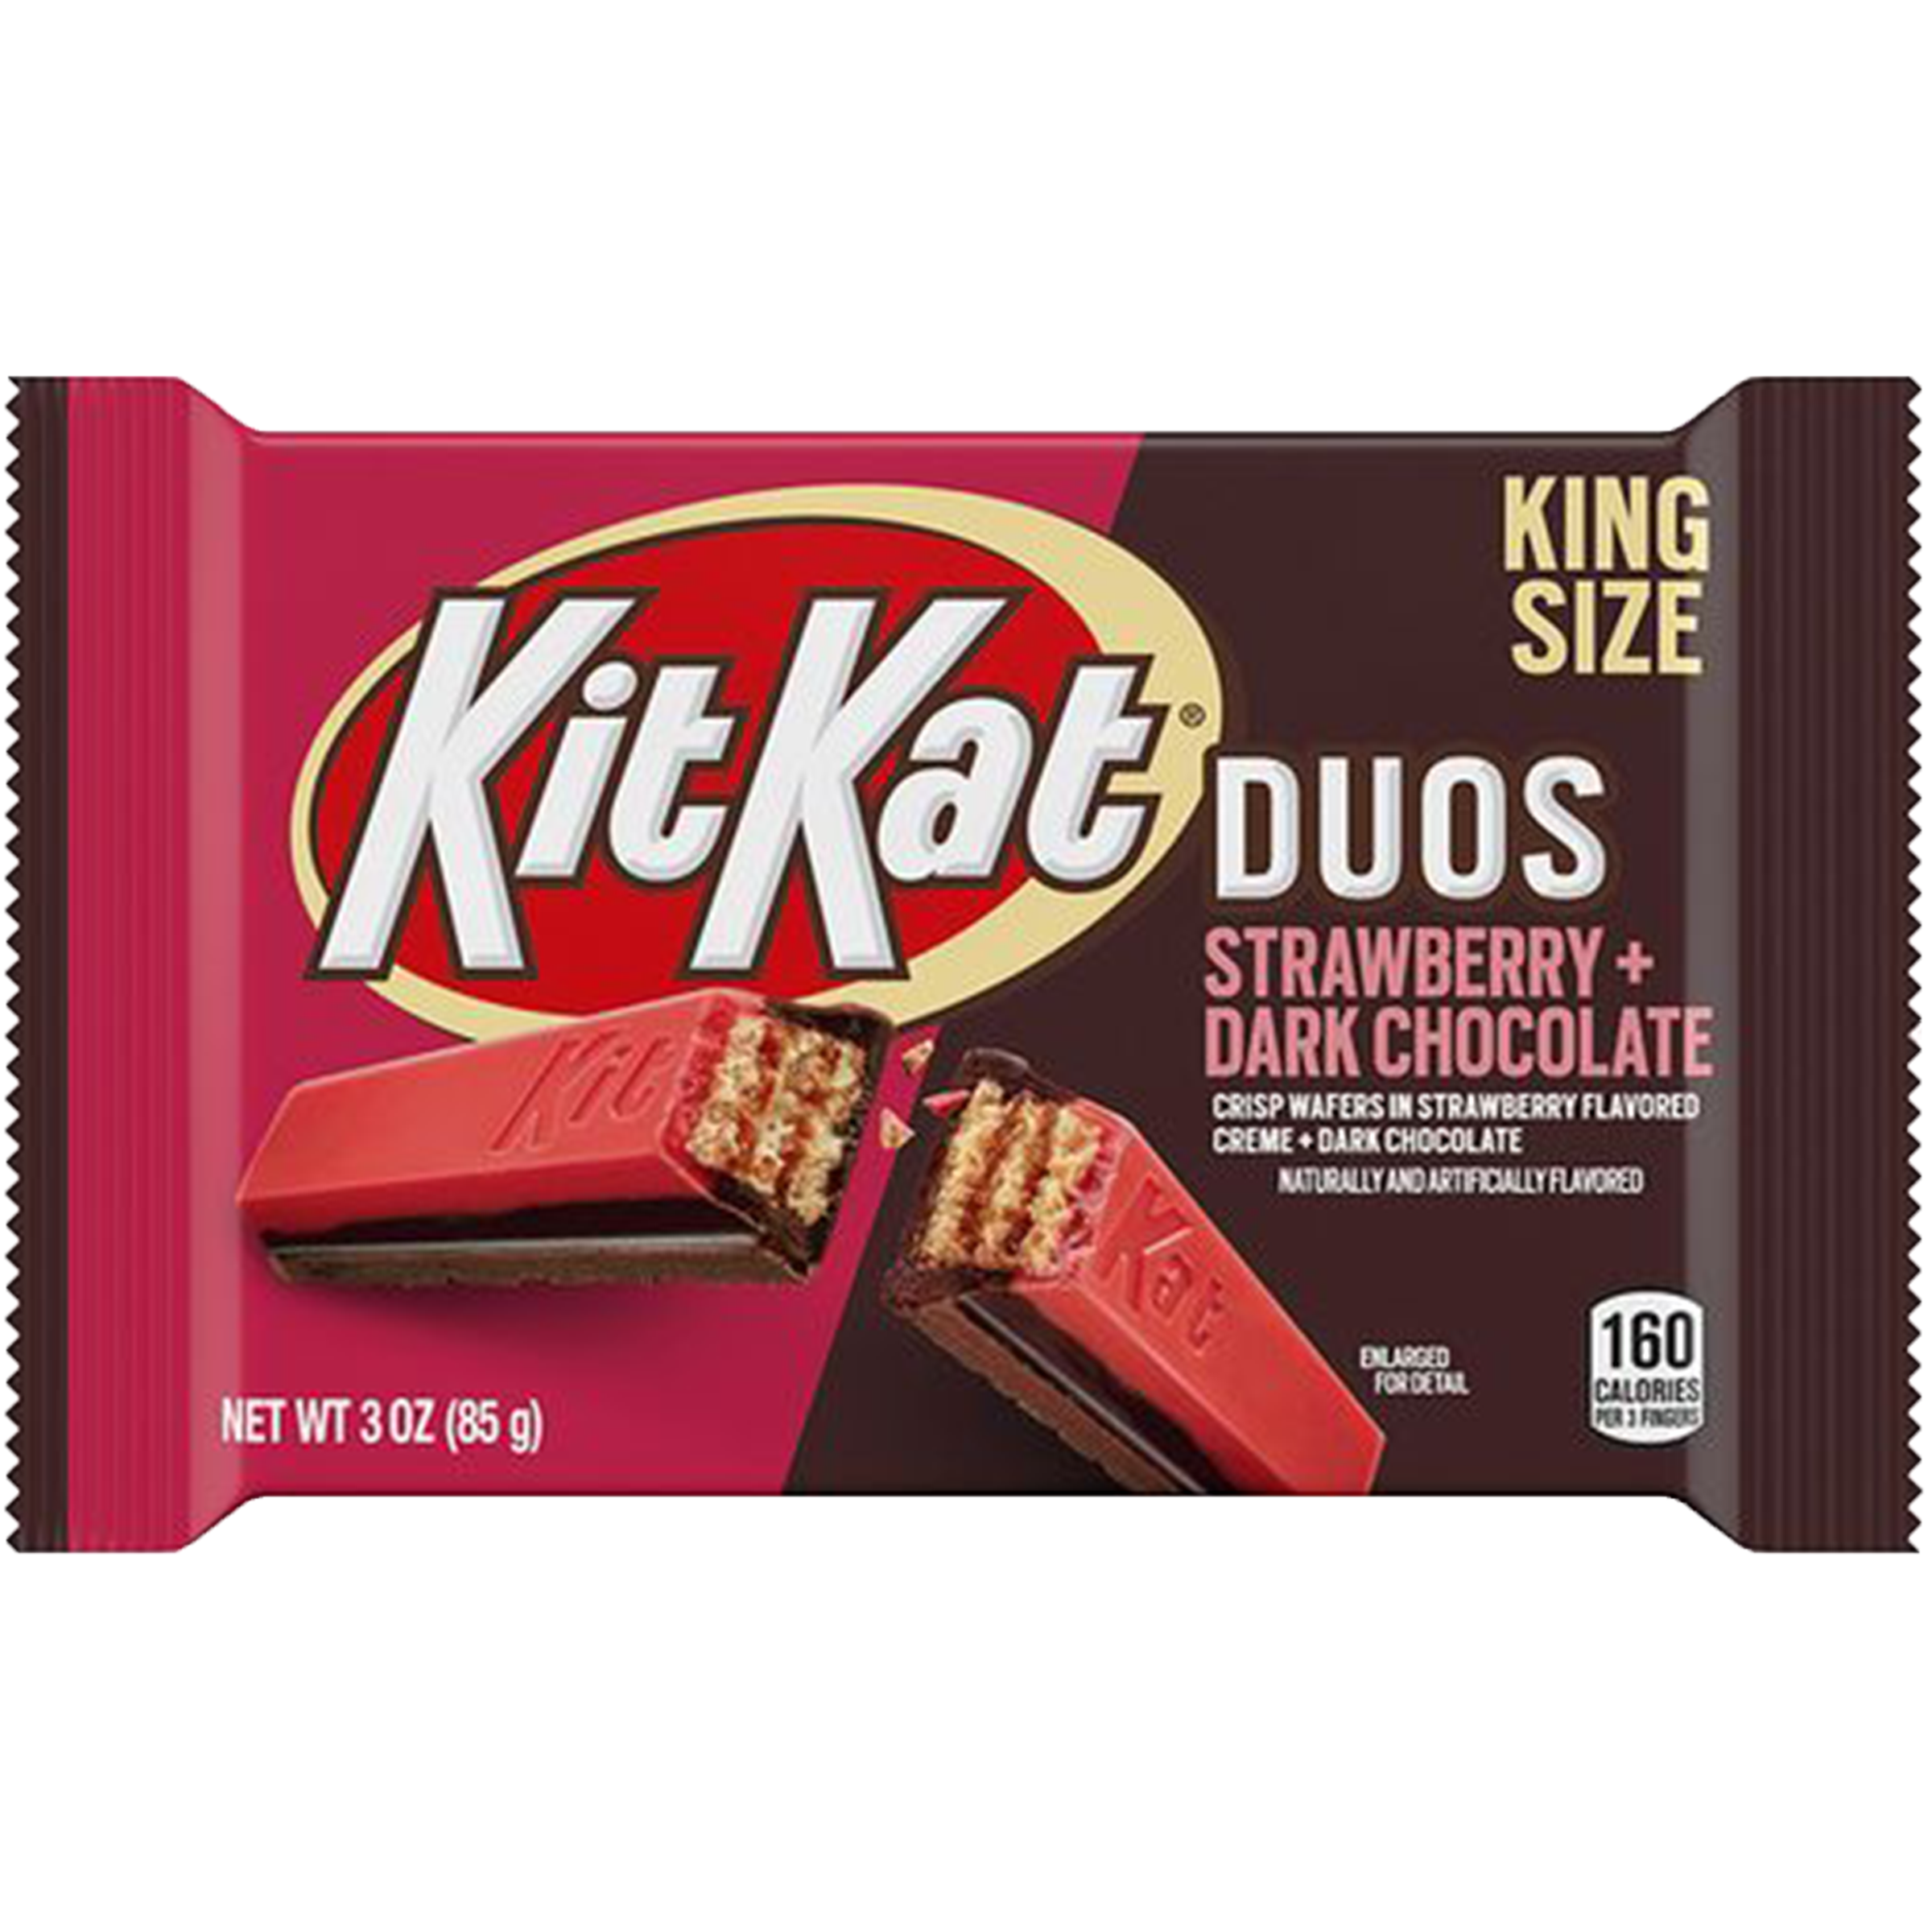 Kit Kat Duos - Strawberry & Dark Chocolate (King Size)